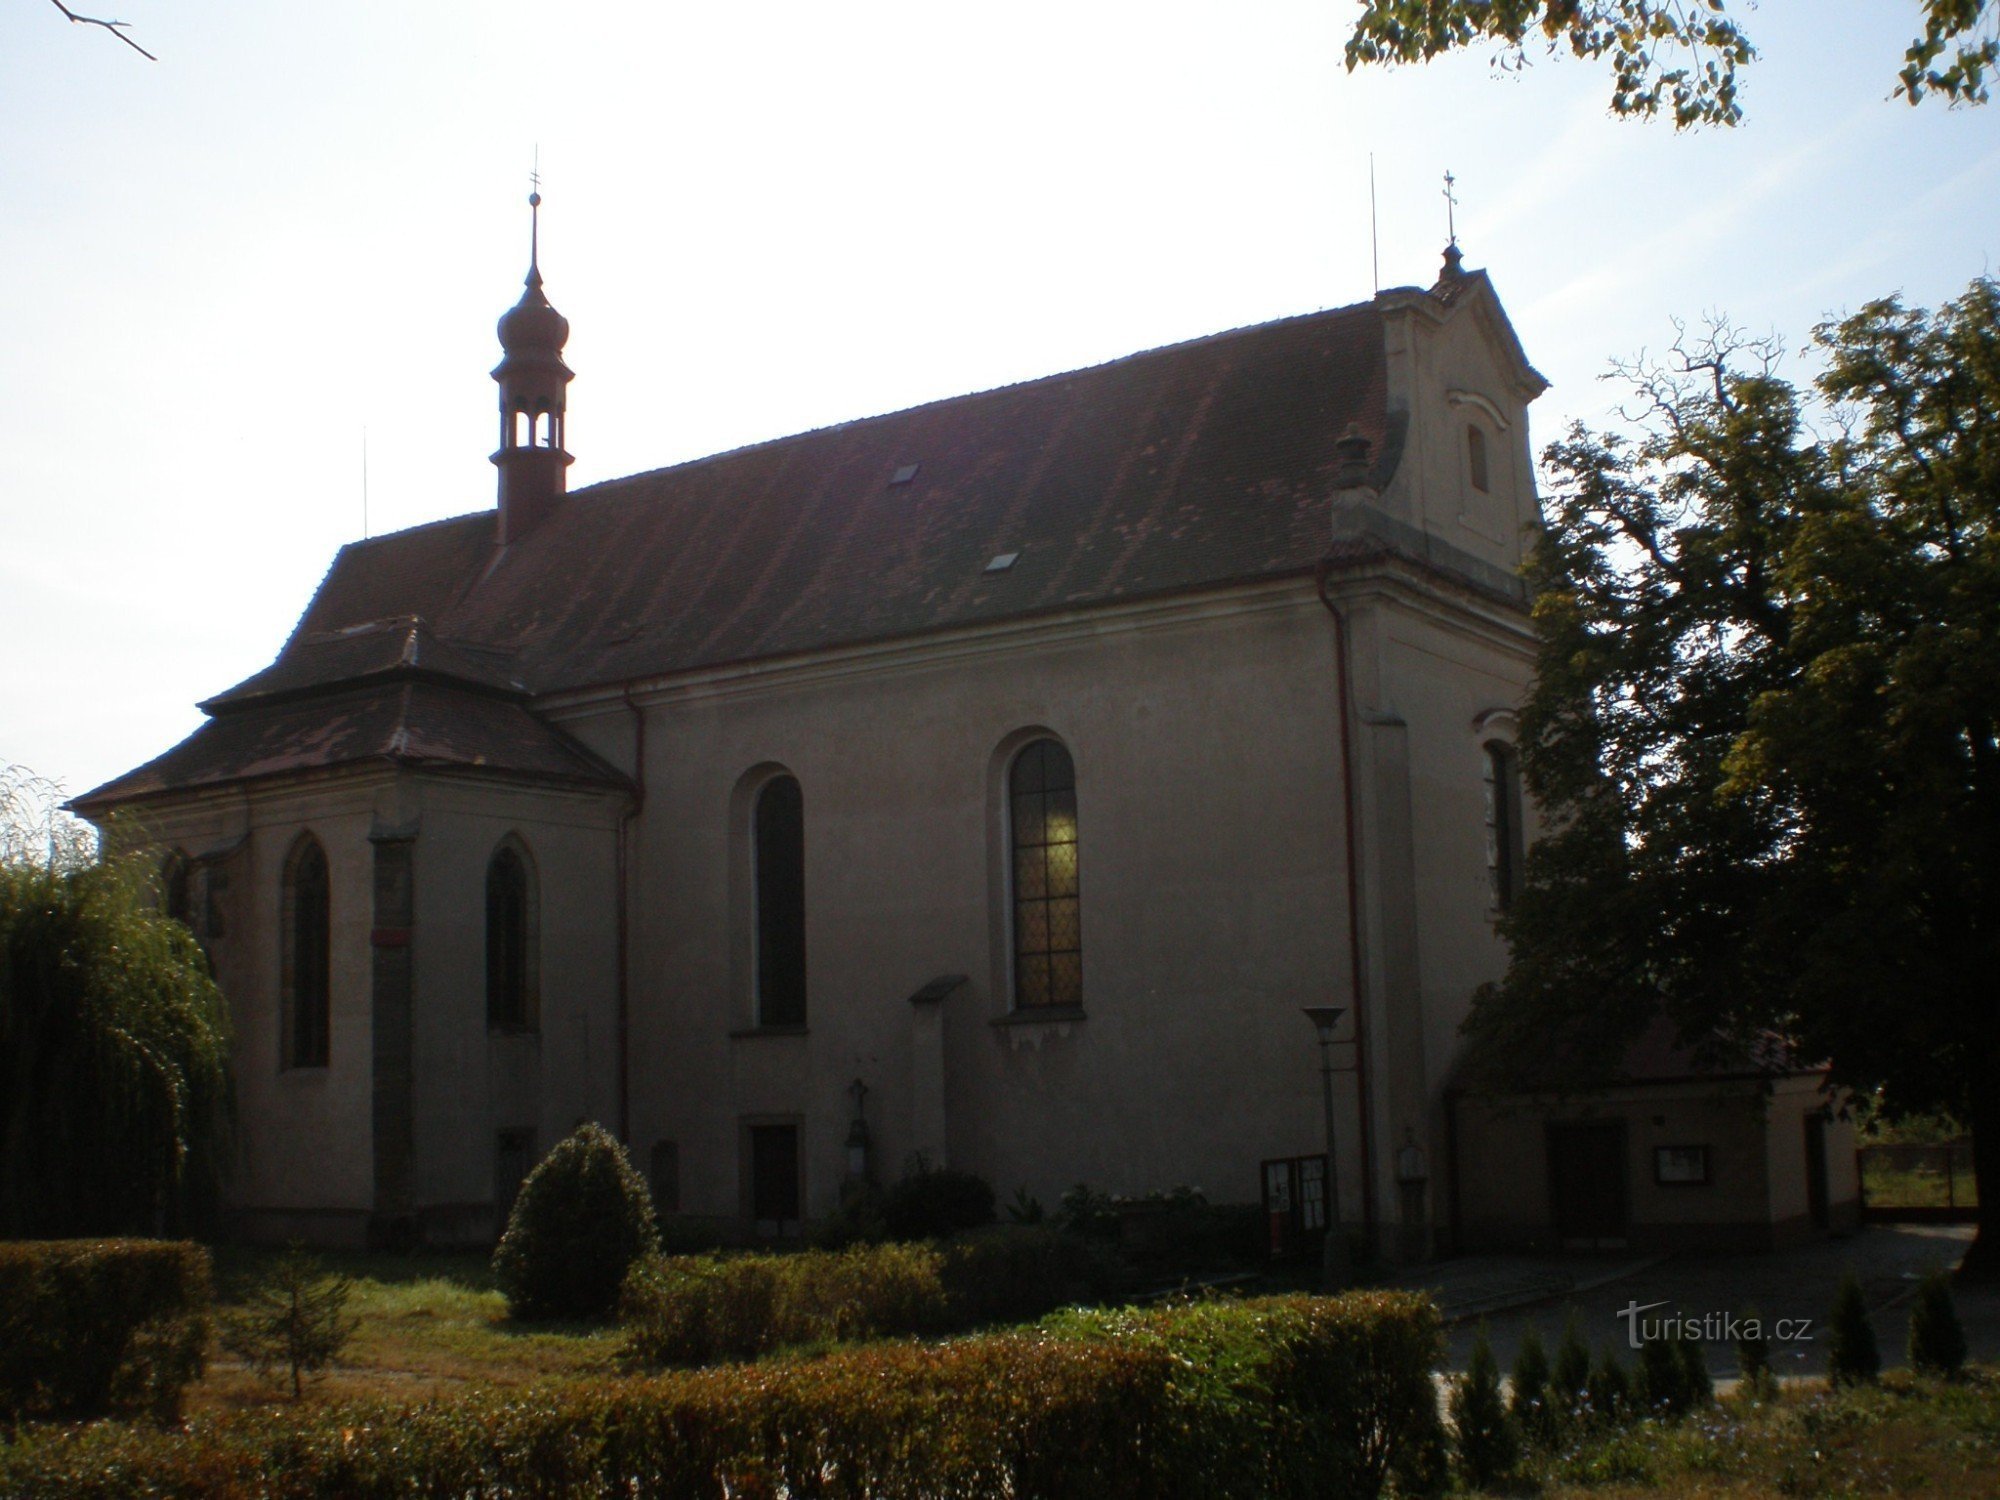 Sezemice - Biserica Sf. Treime